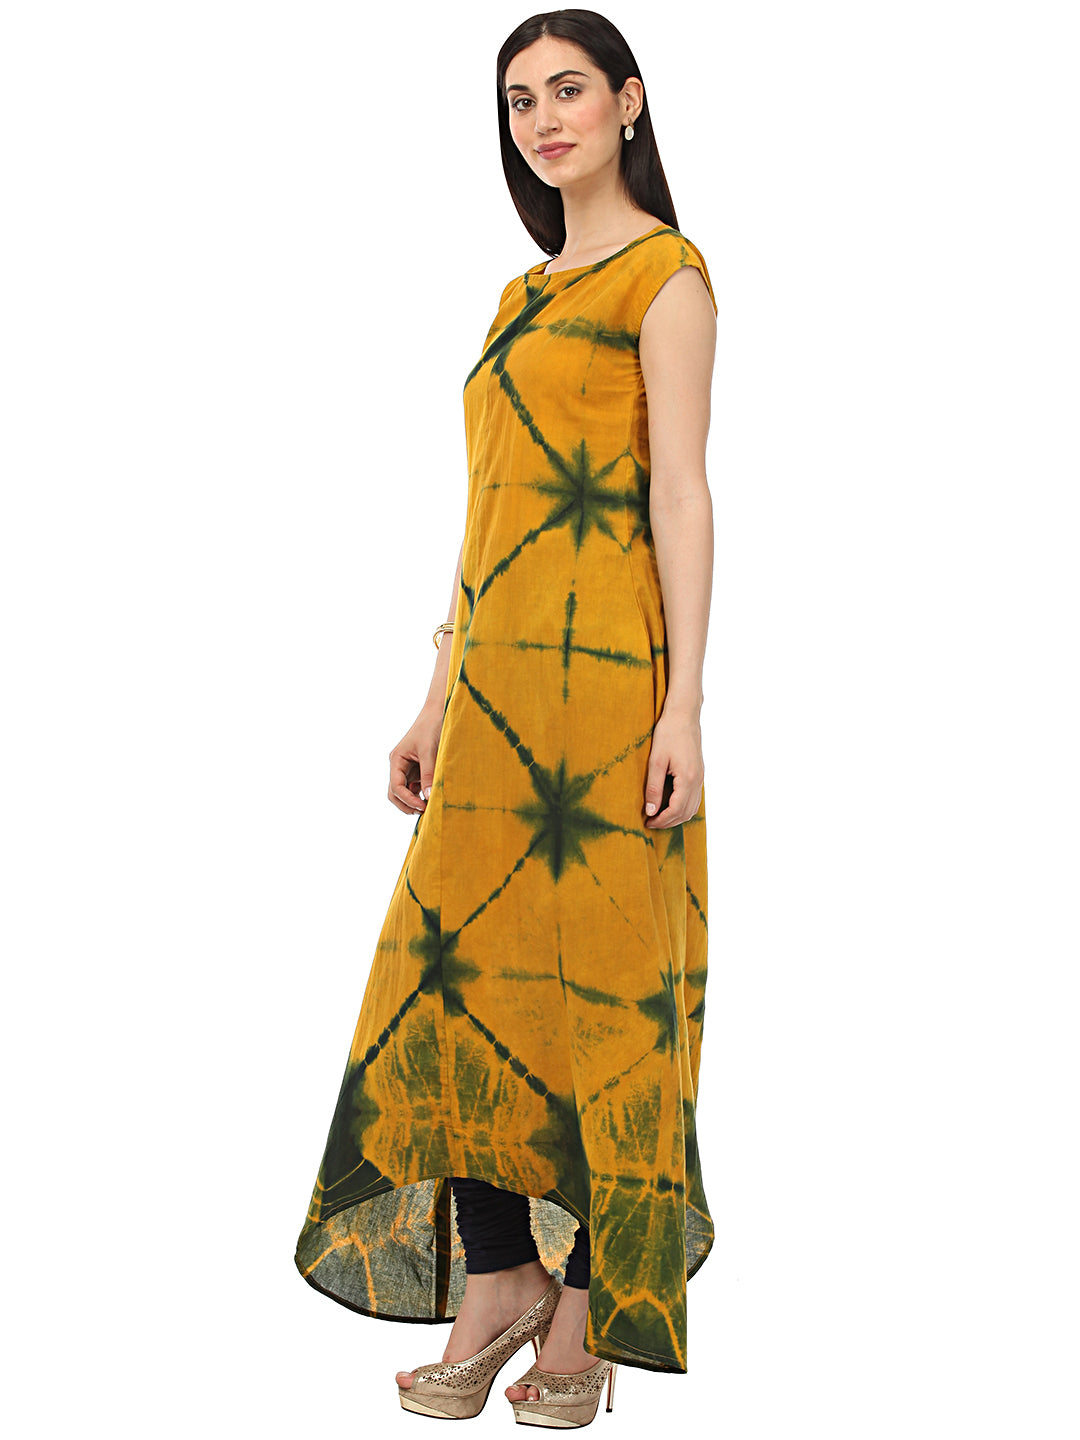 Clamp Dyed Shibori Dress for women